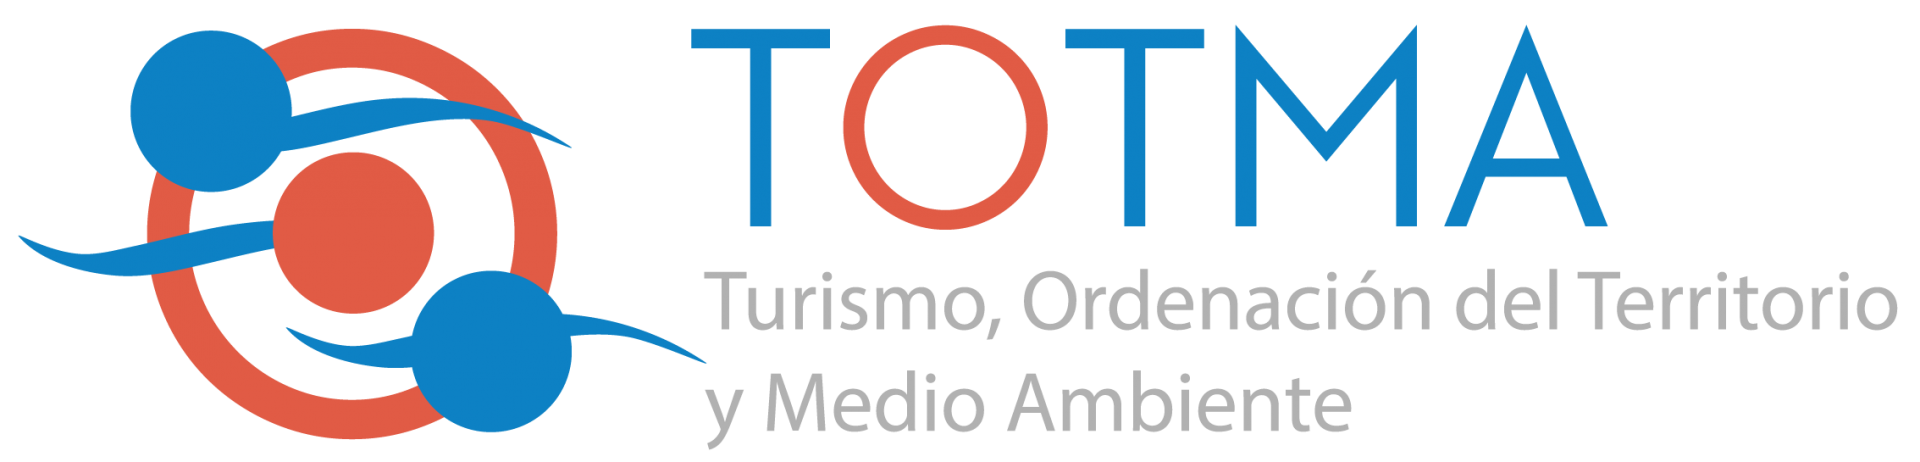 TOTMA_Logo_2021